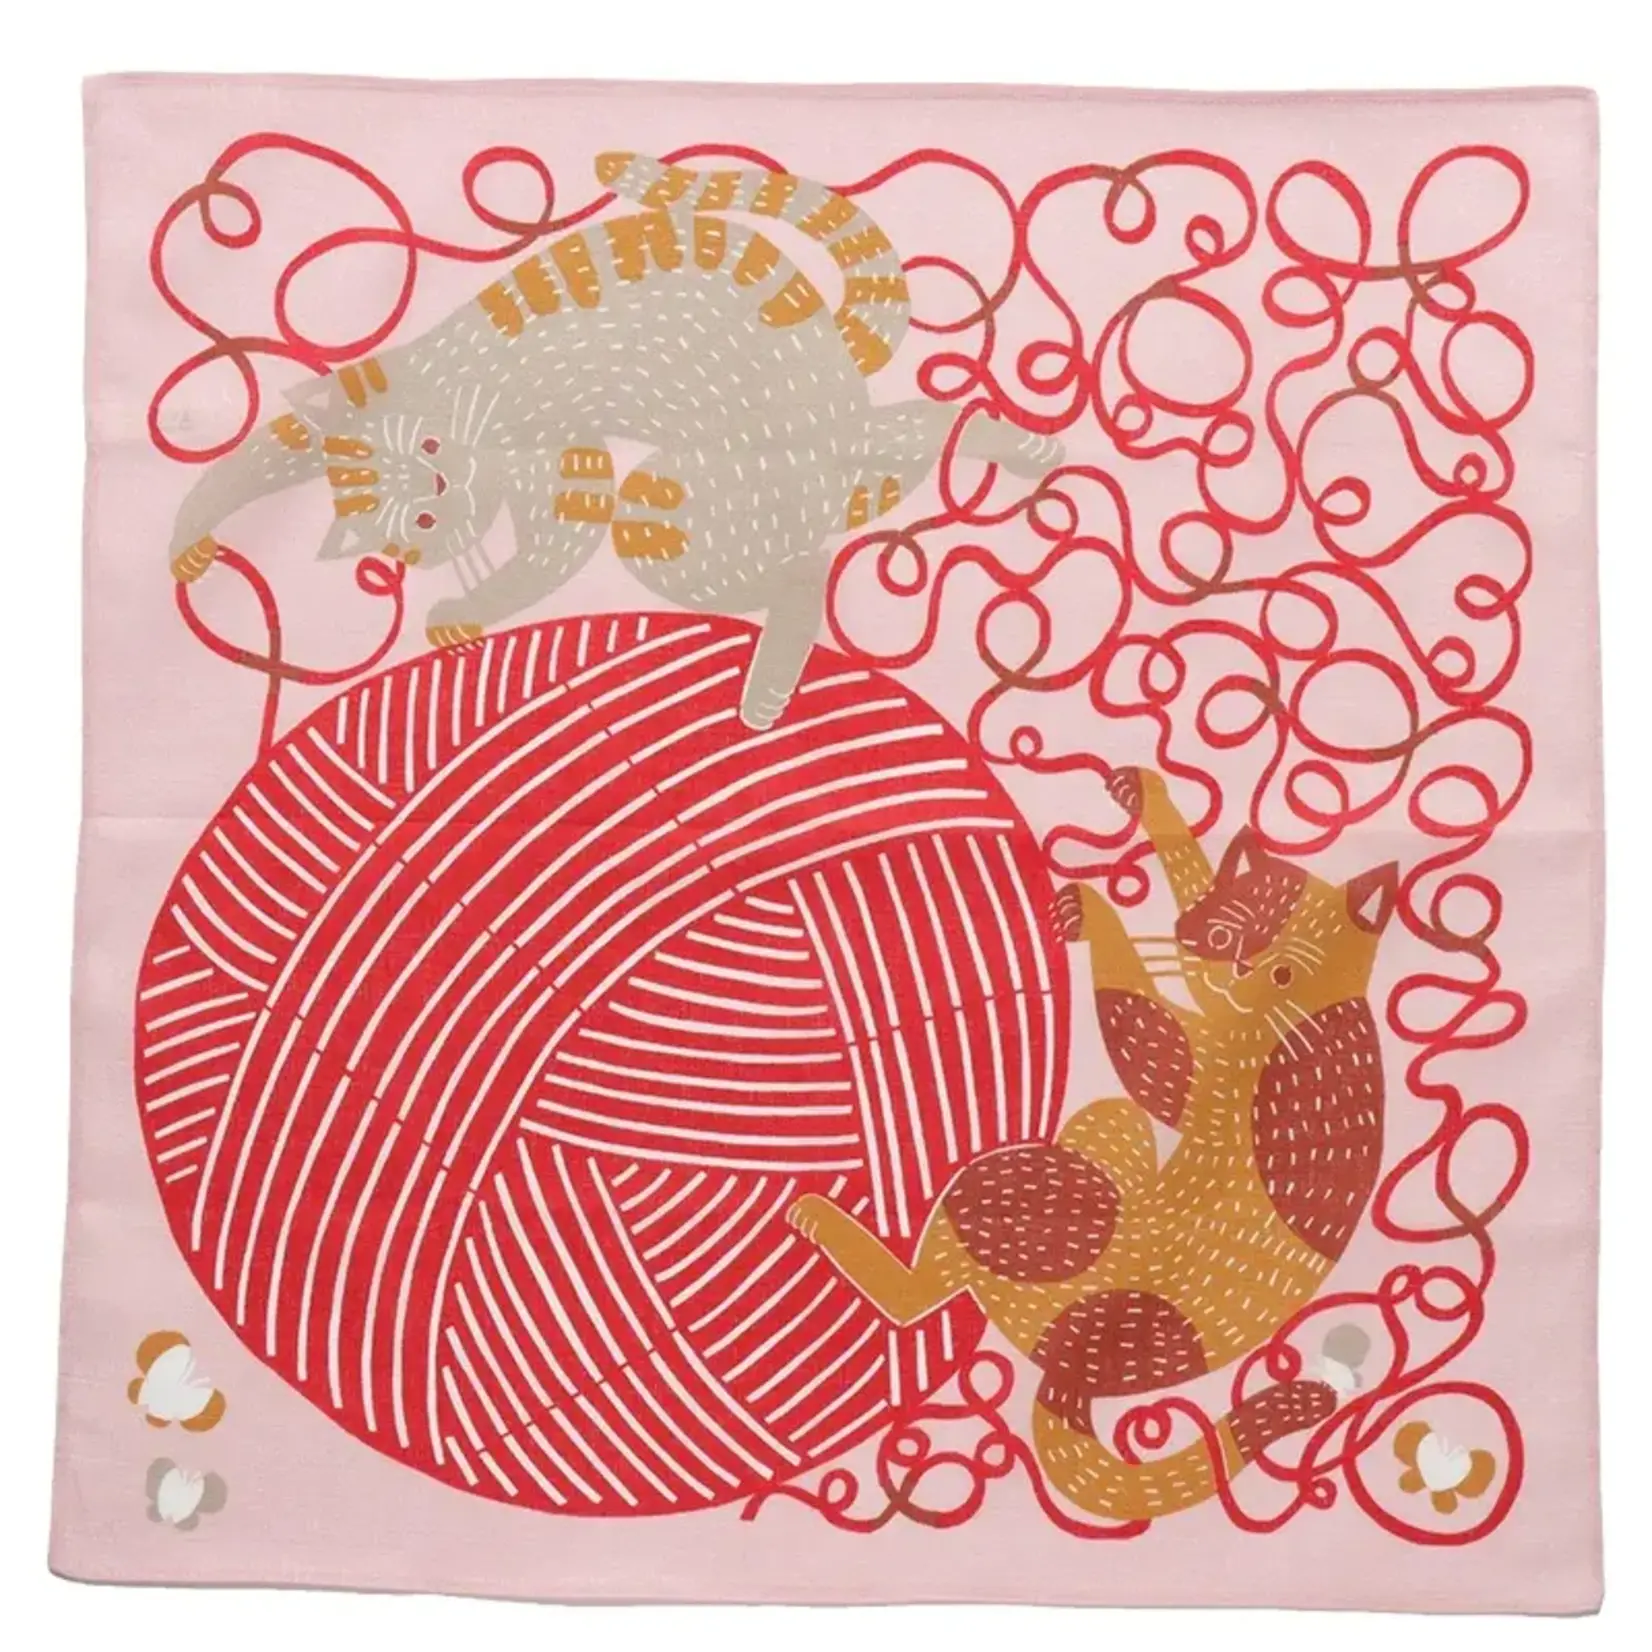 Furoshiki - Small, "Cats & Yarn" - 990-M068